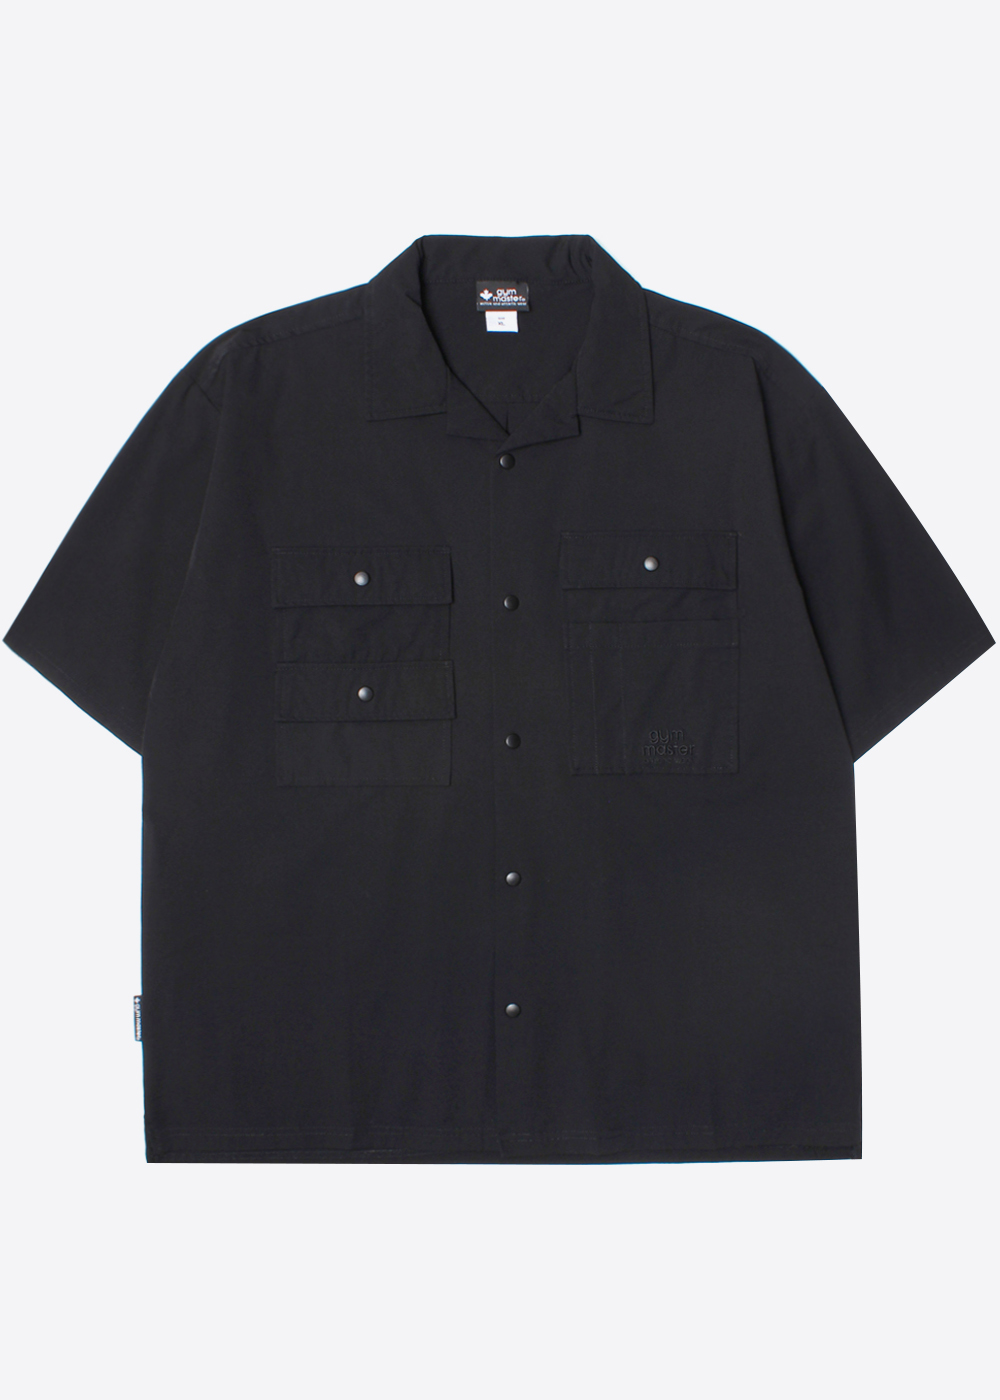 GYM MASTER’over fit’ nylon multi pocket shirt